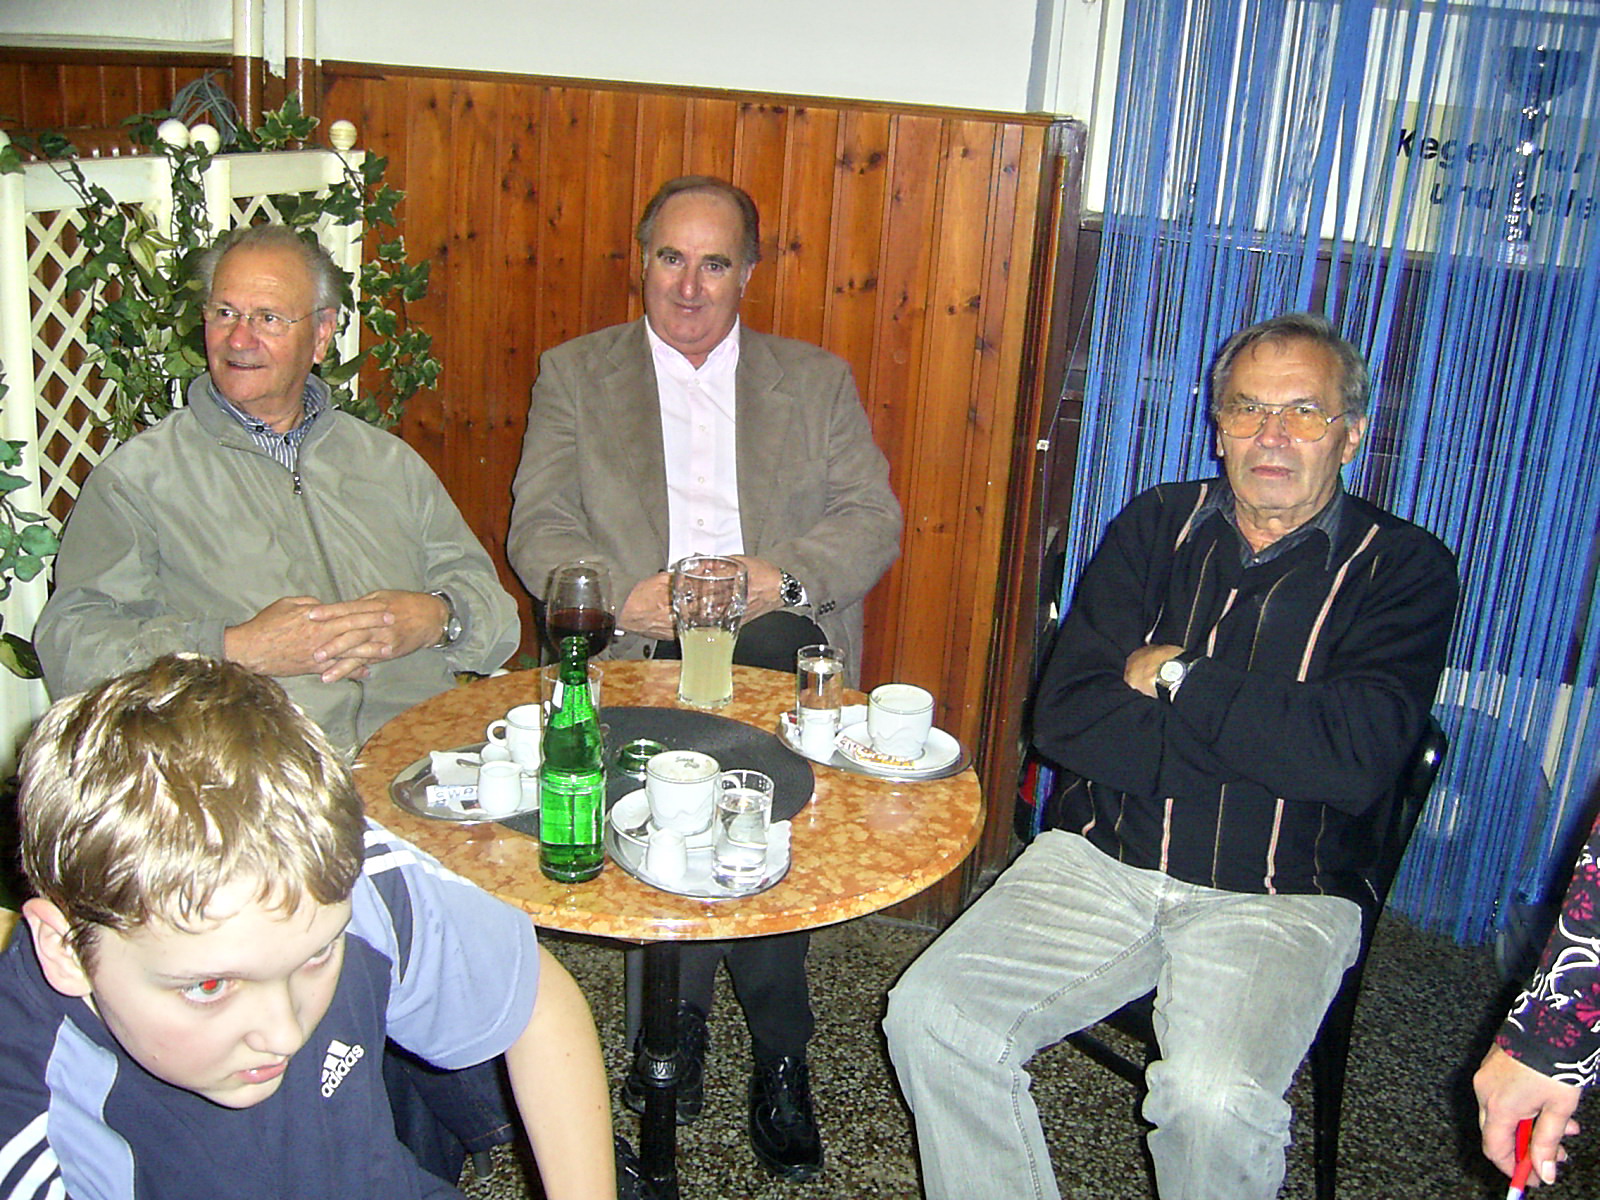 2008-11-21 Kegelabend beim Weninger in Pinkafeld